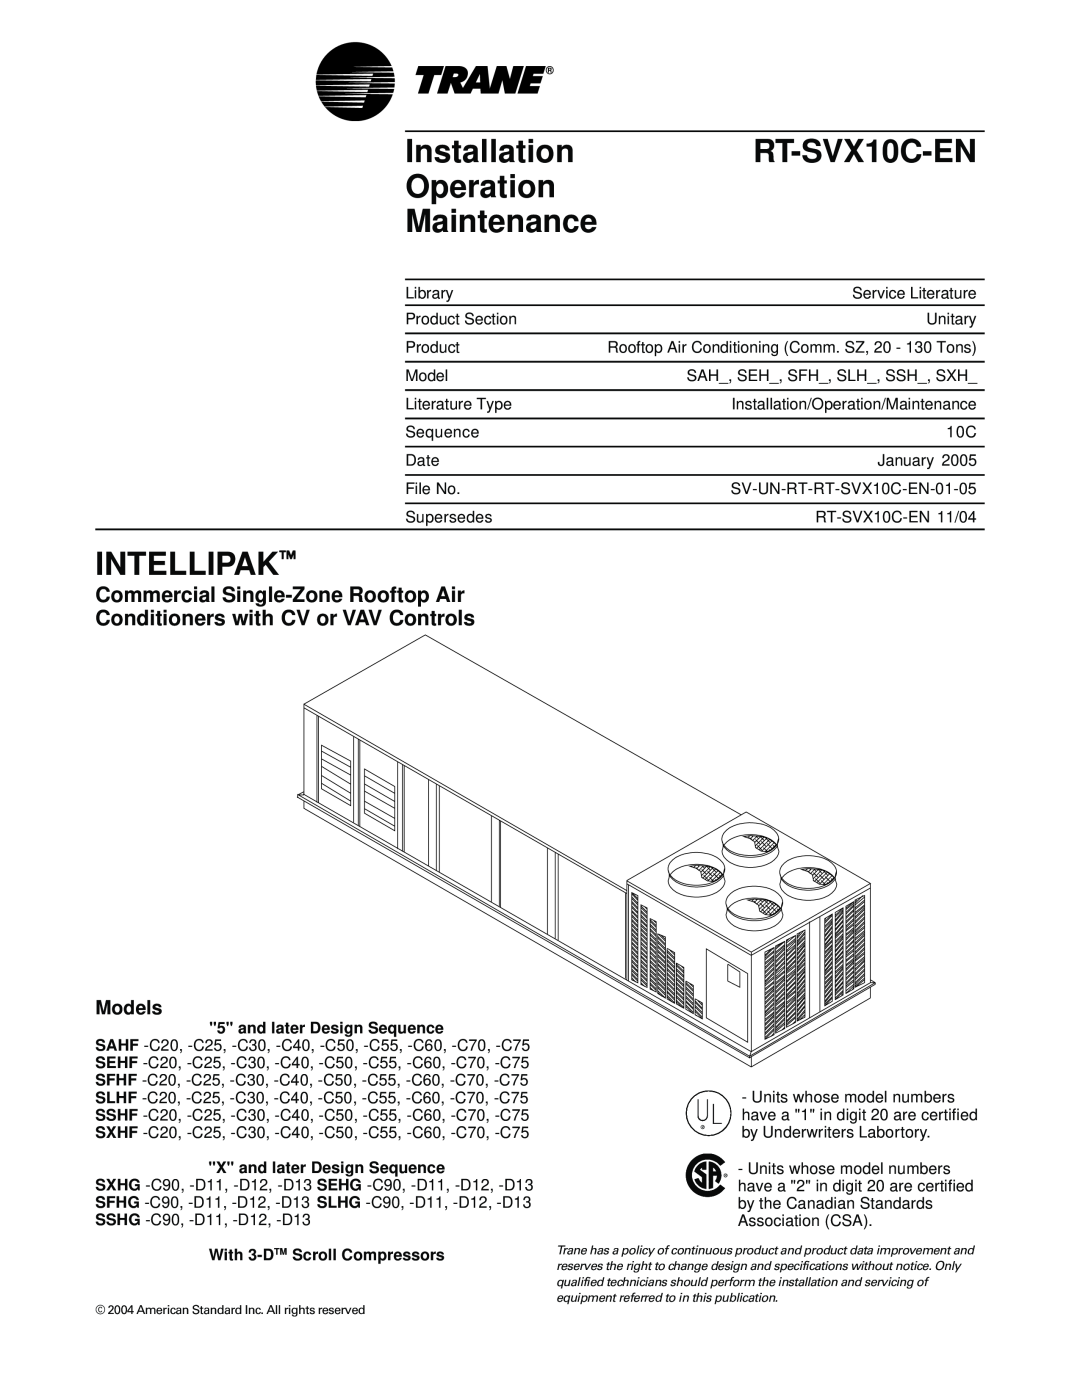 Trane RT-SVX10C-EN specifications Installation, Operation, Maintenance, Intellipak, Commercial Single-ZoneRooftop Air 